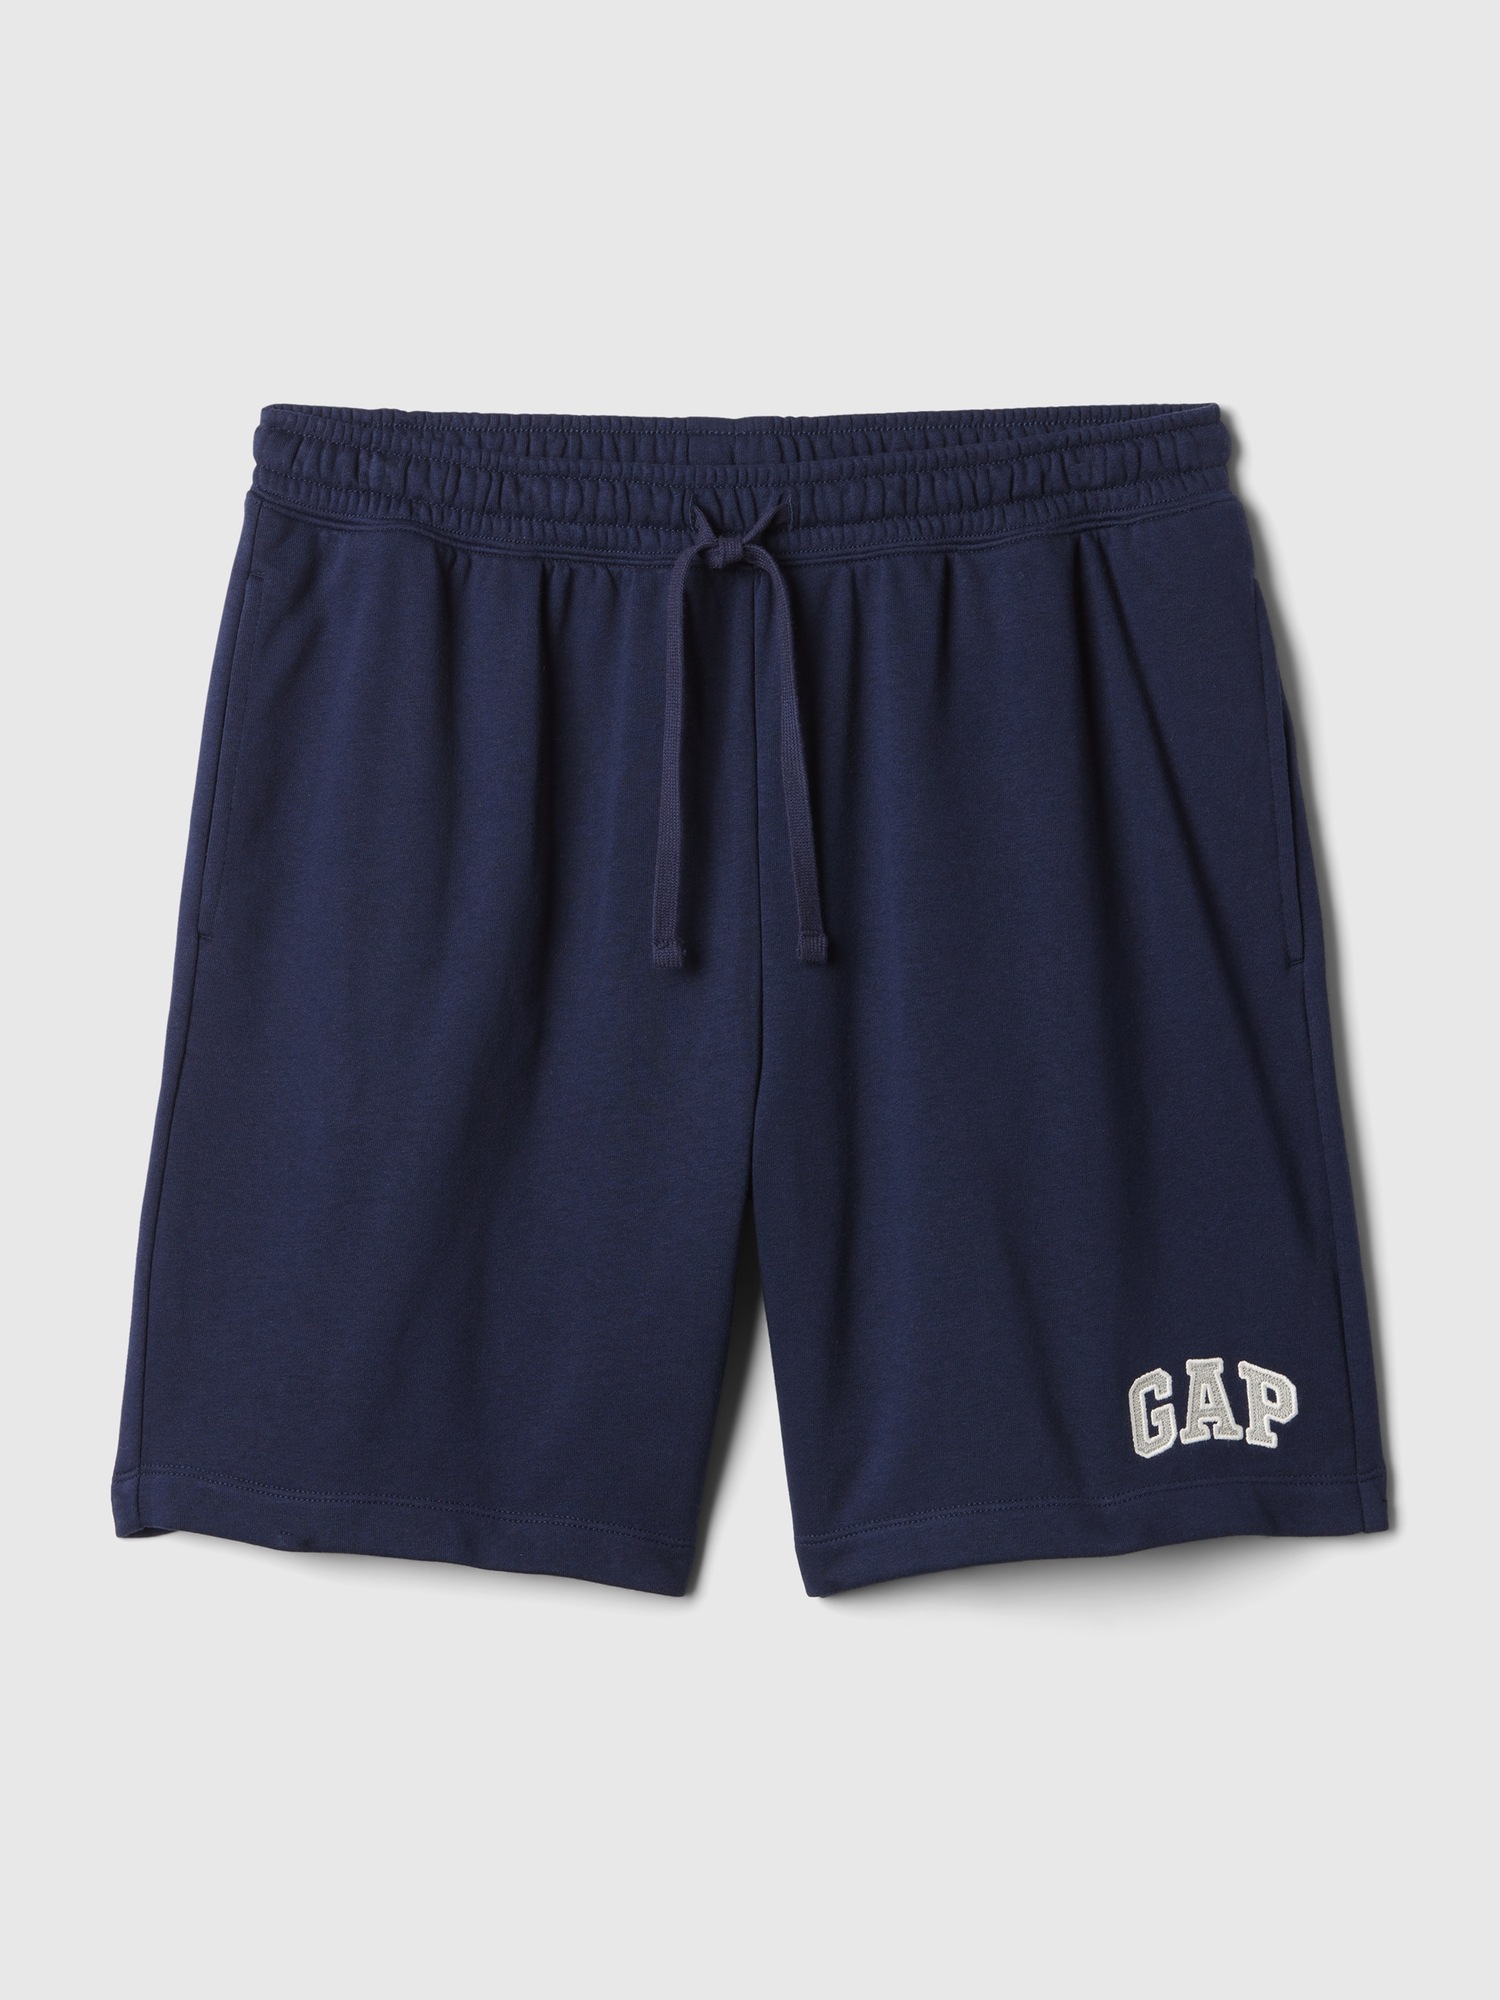 GAP Logo Shorts - Men's